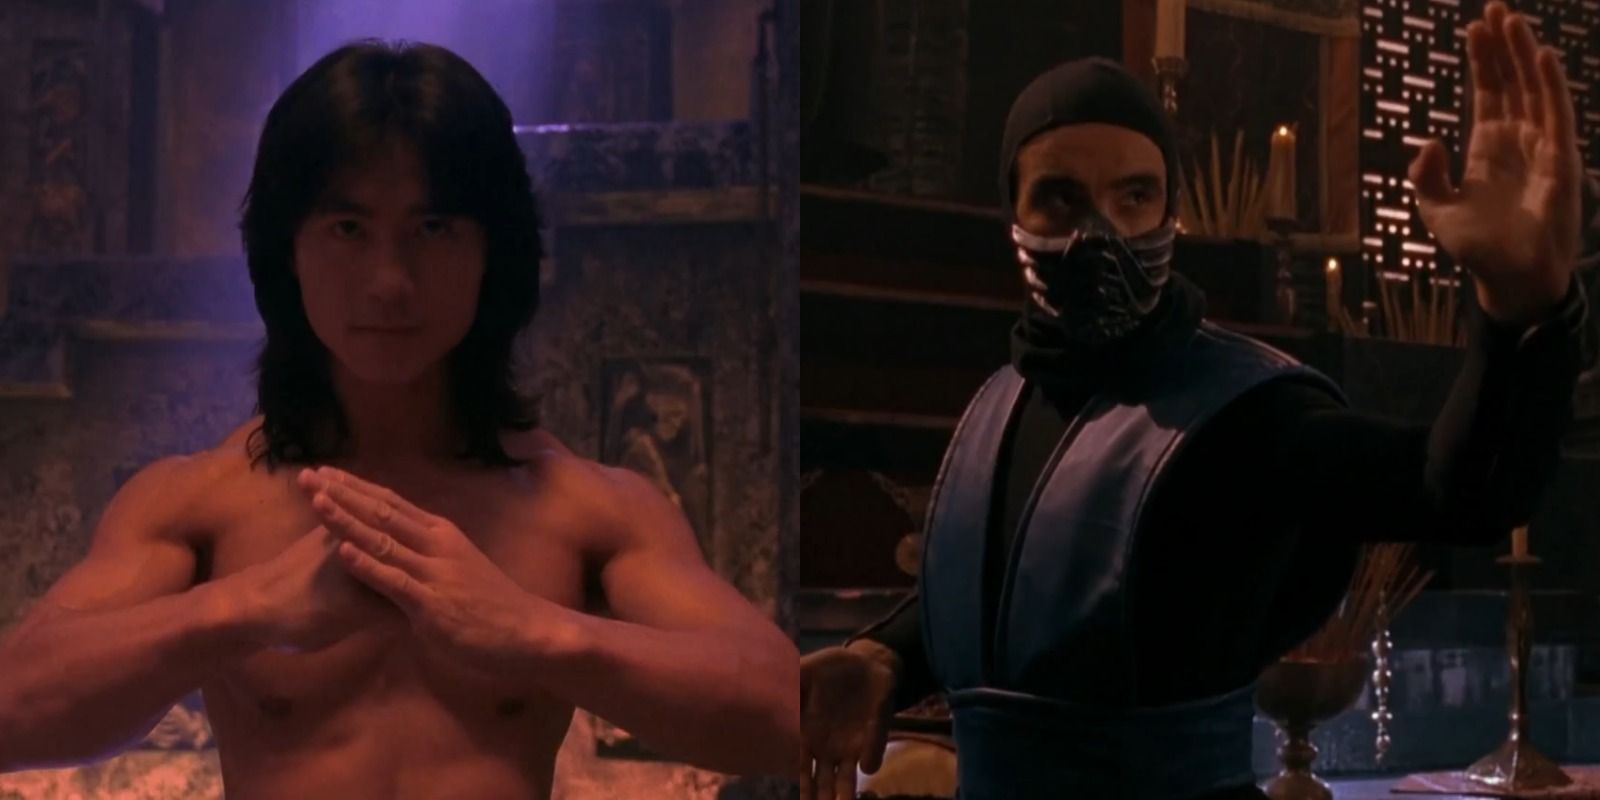 Movie Review: Mortal Kombat (1995) – The Ü Reviews